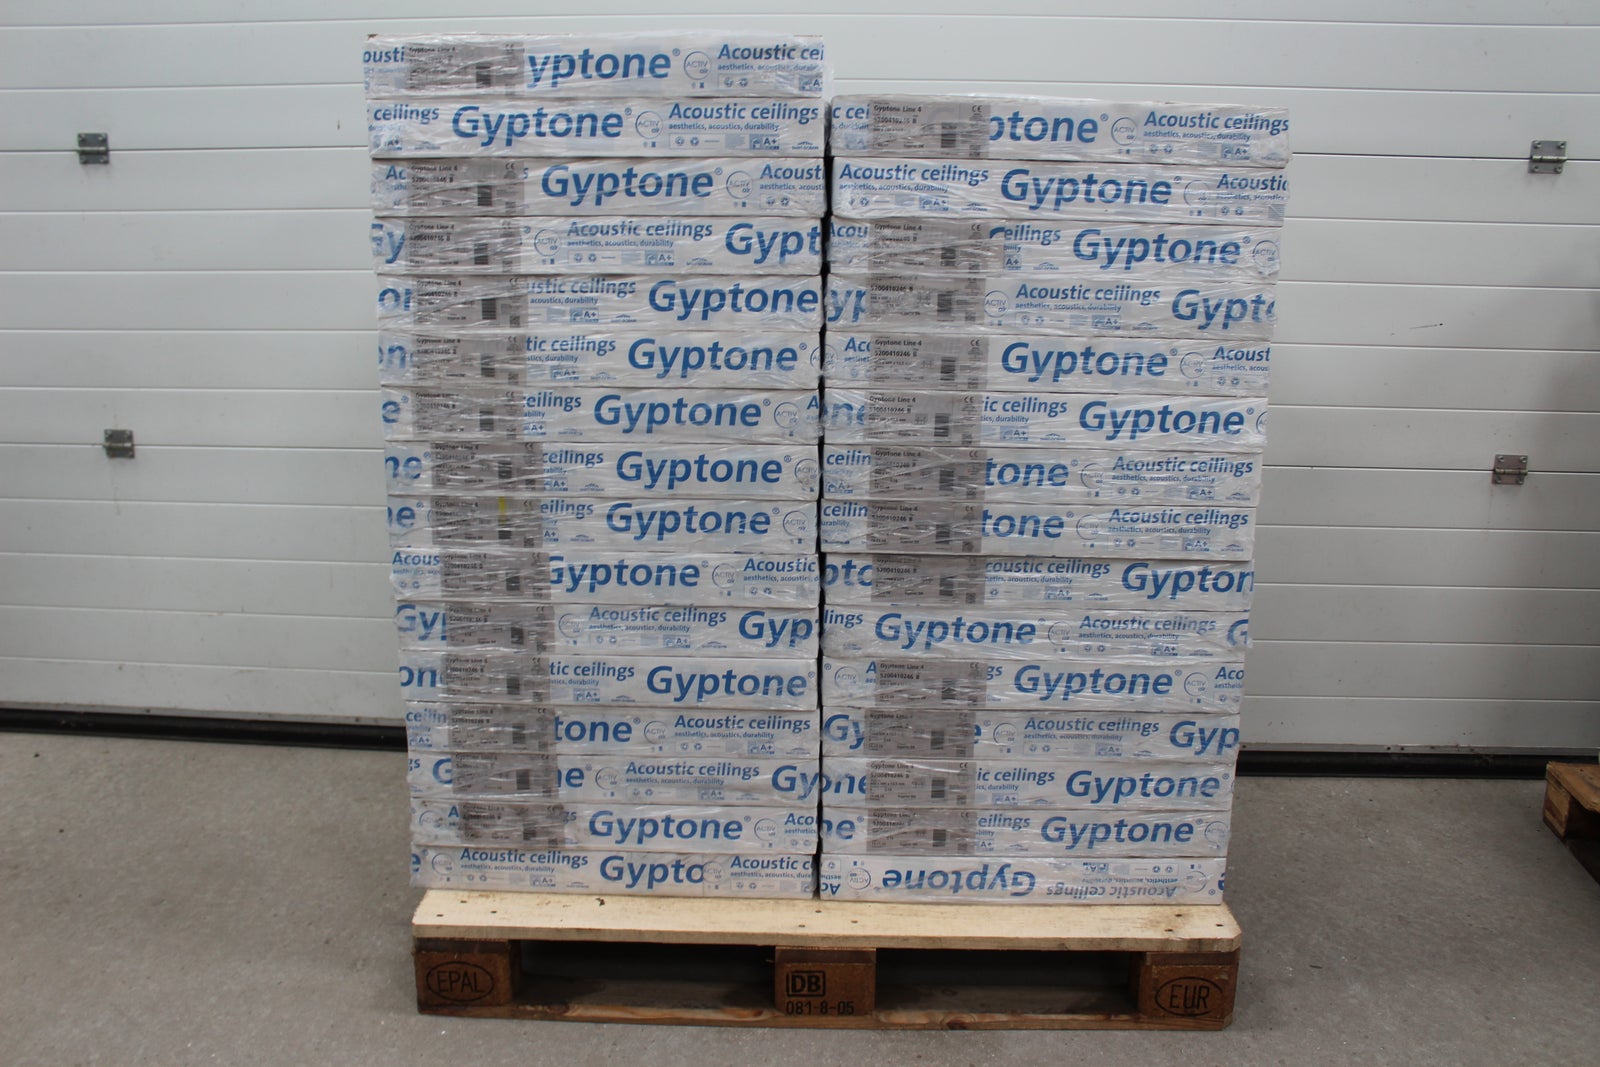 Gyptone line 4 gips lydplader 67 m2